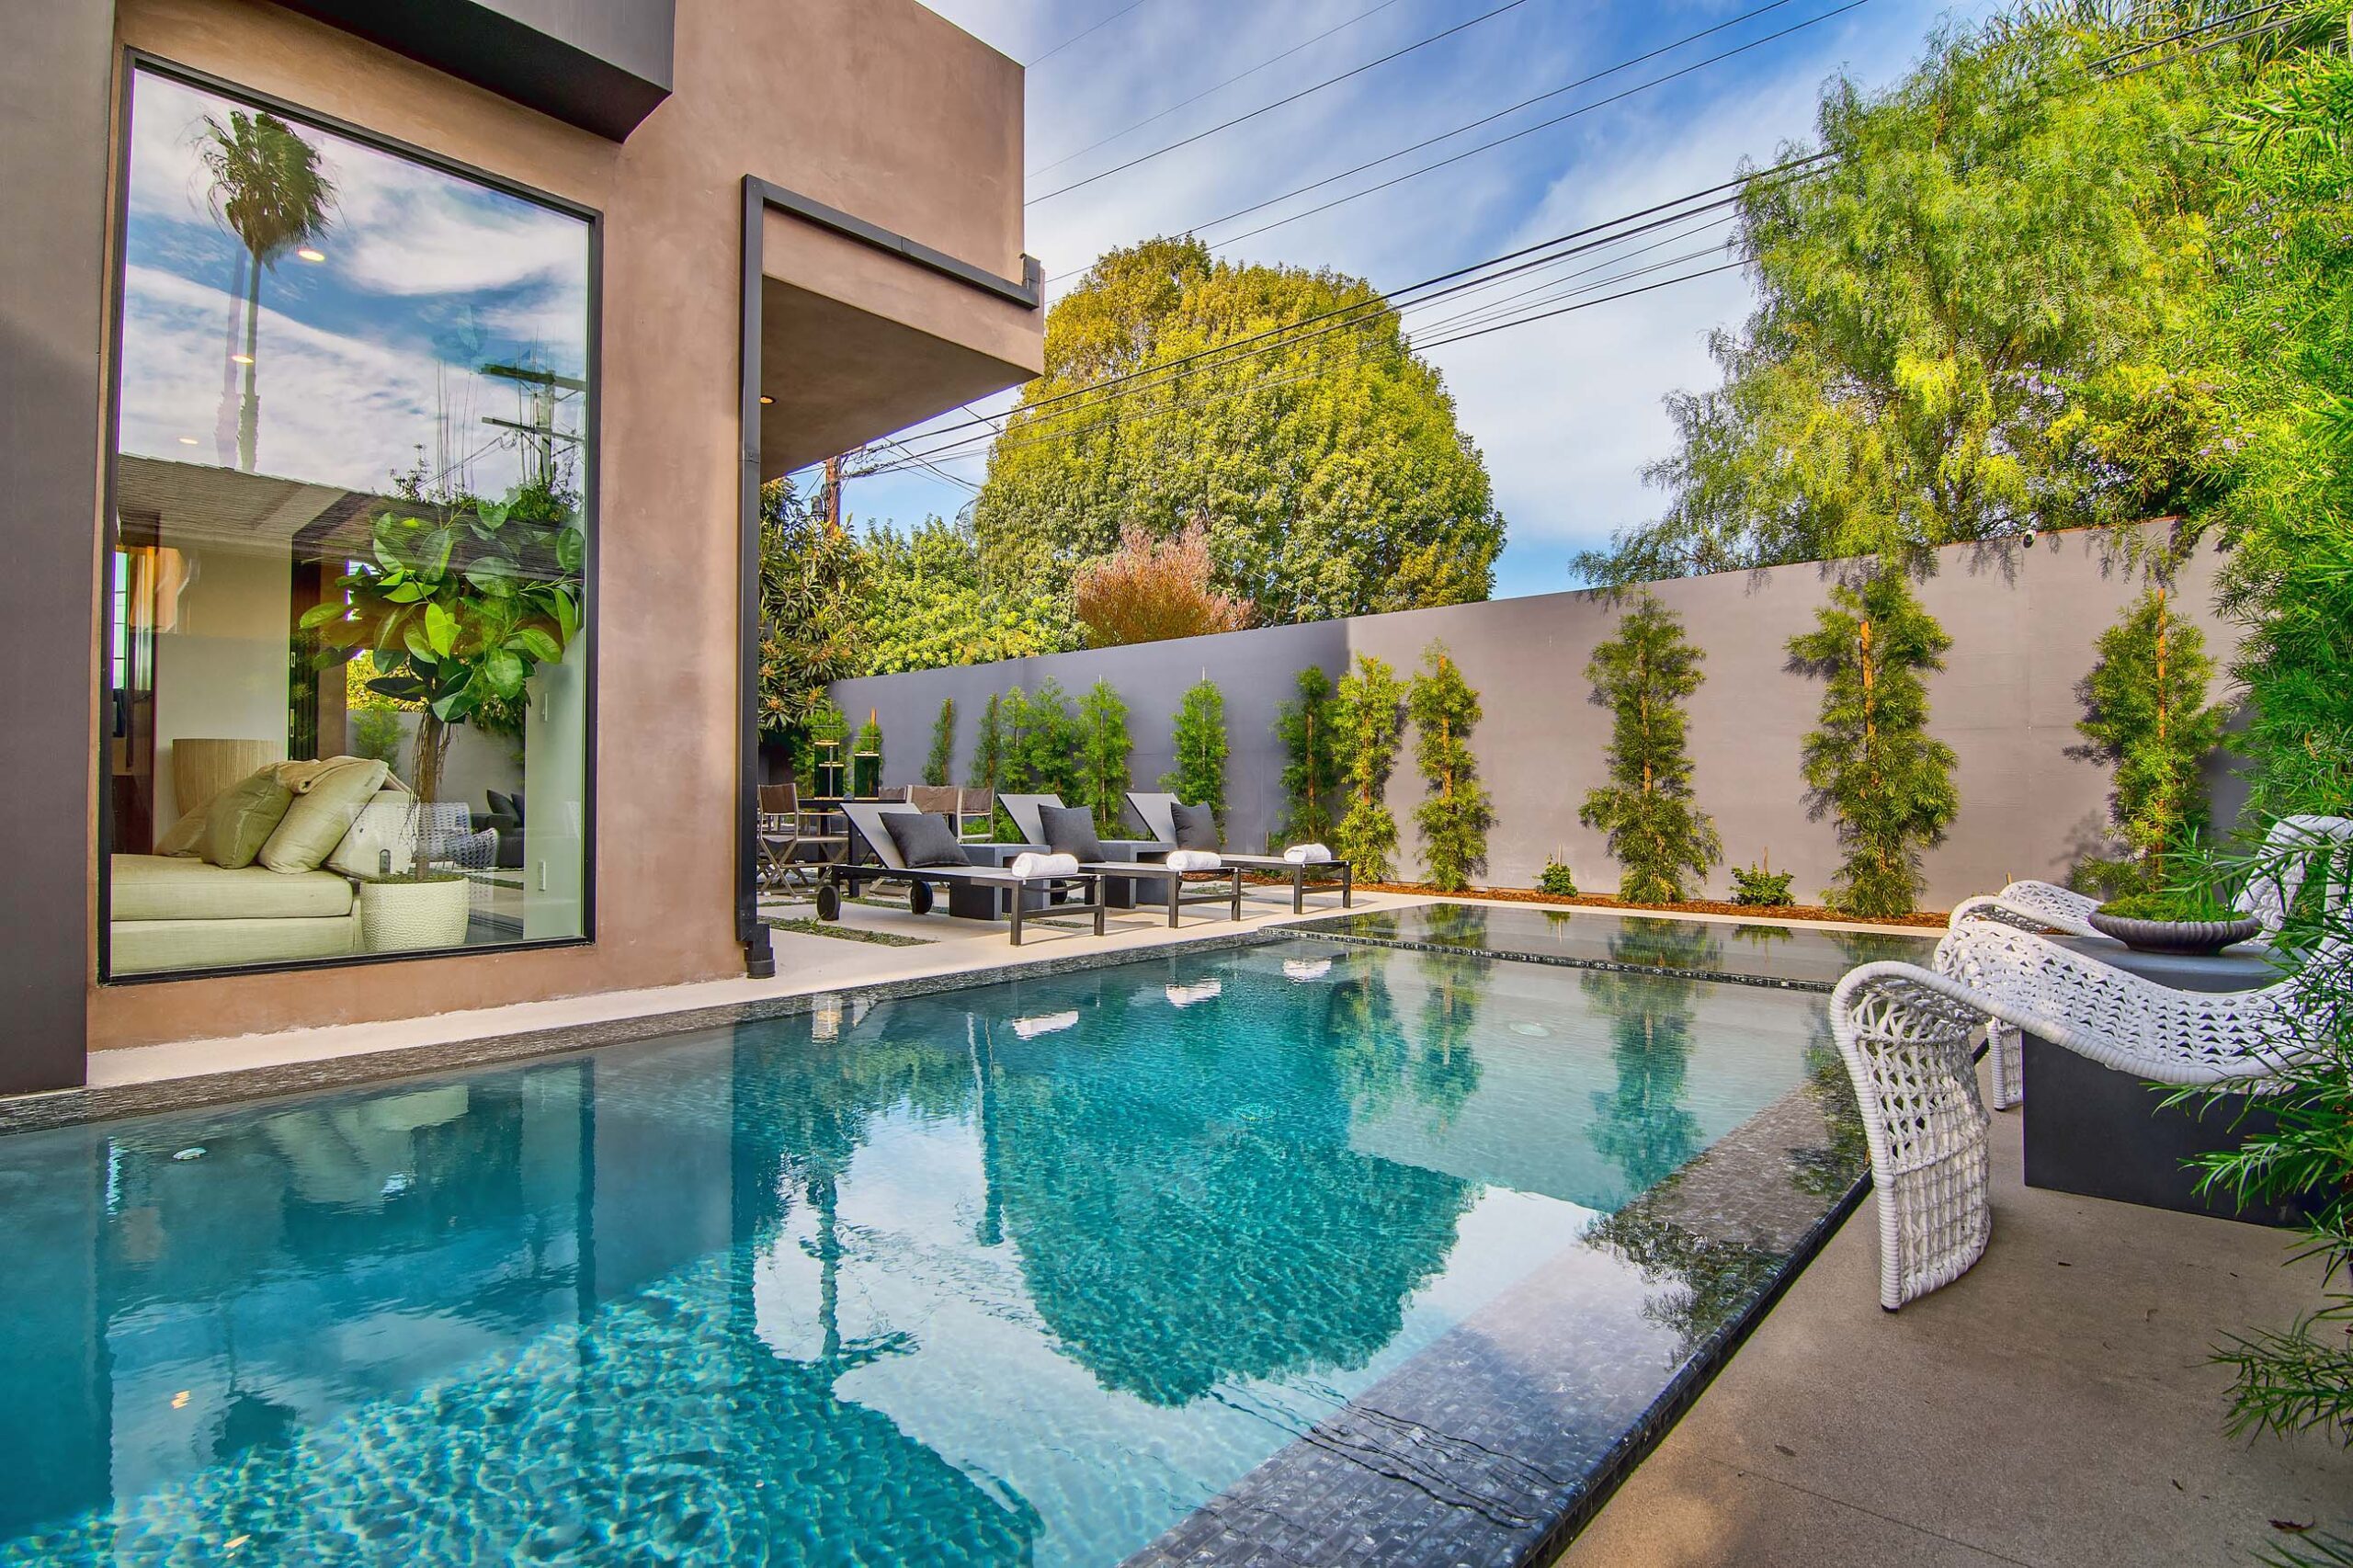 Poolside shot of modern California home